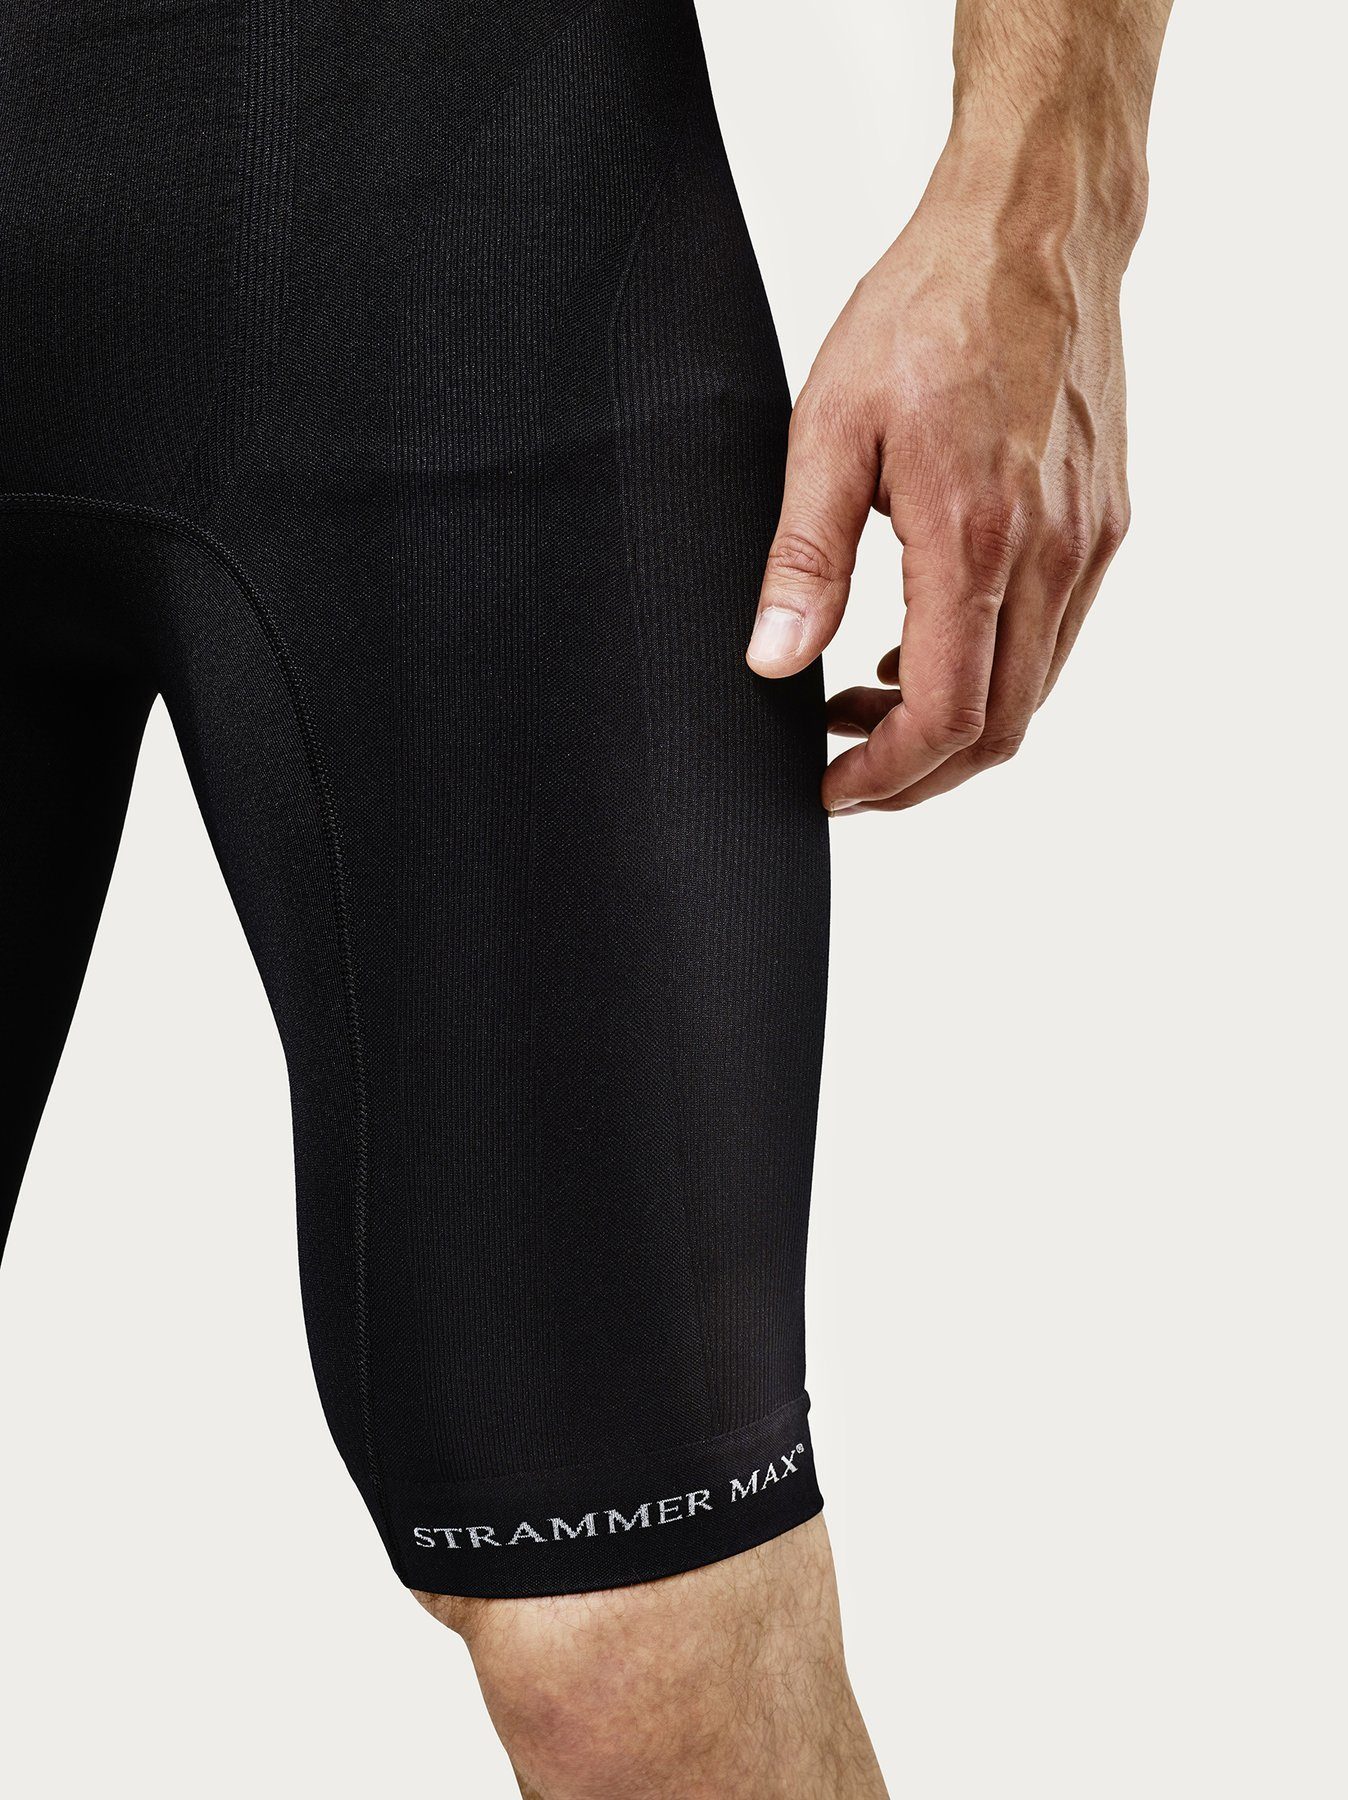 Max Strammer High Tech atmungsaktives Shapewear, Compression Gewebe Trainingsshorts Shorts Performance® Schwarz